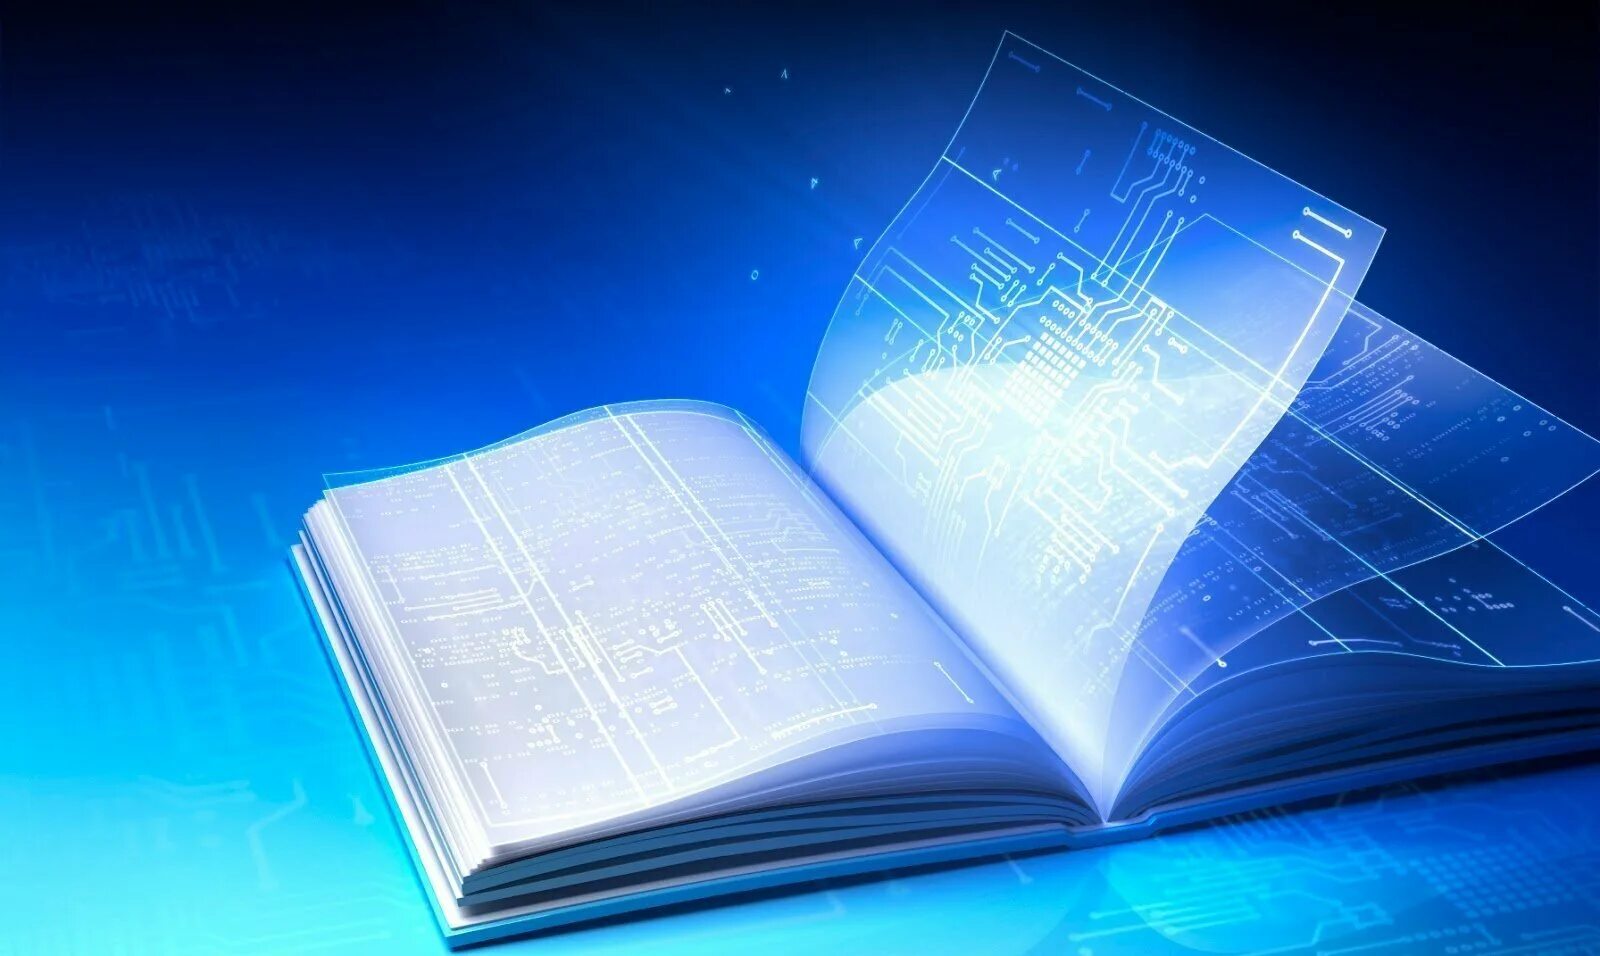 Библиотека научно технической информации. Фон для презентации книги. Фон с книжками для презентации. Книги на голубом фоне. Фон для буклета.